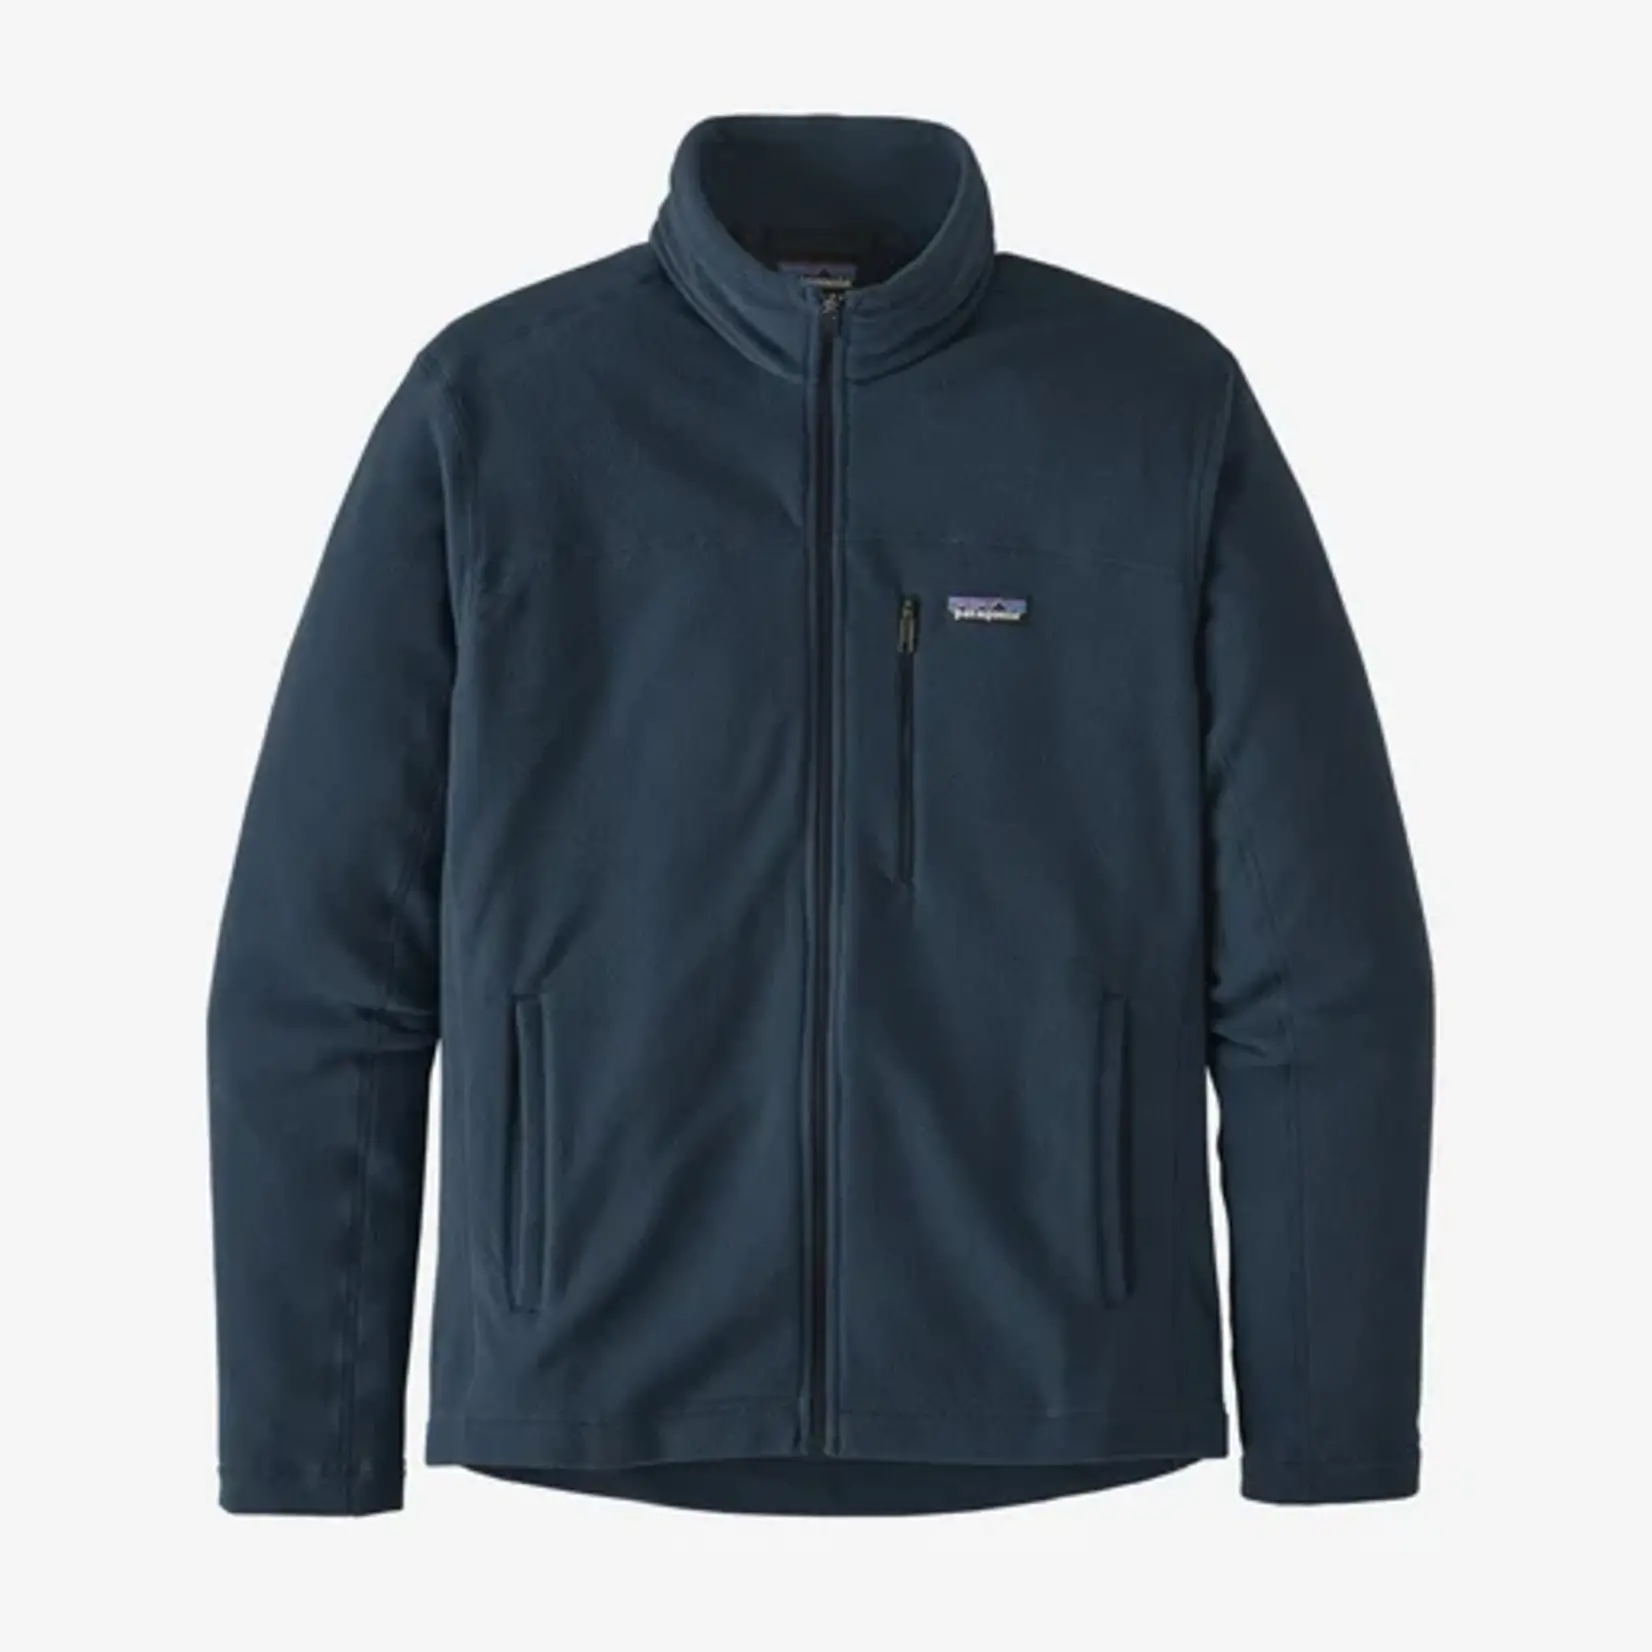 Patagonia M’s micro d jacket